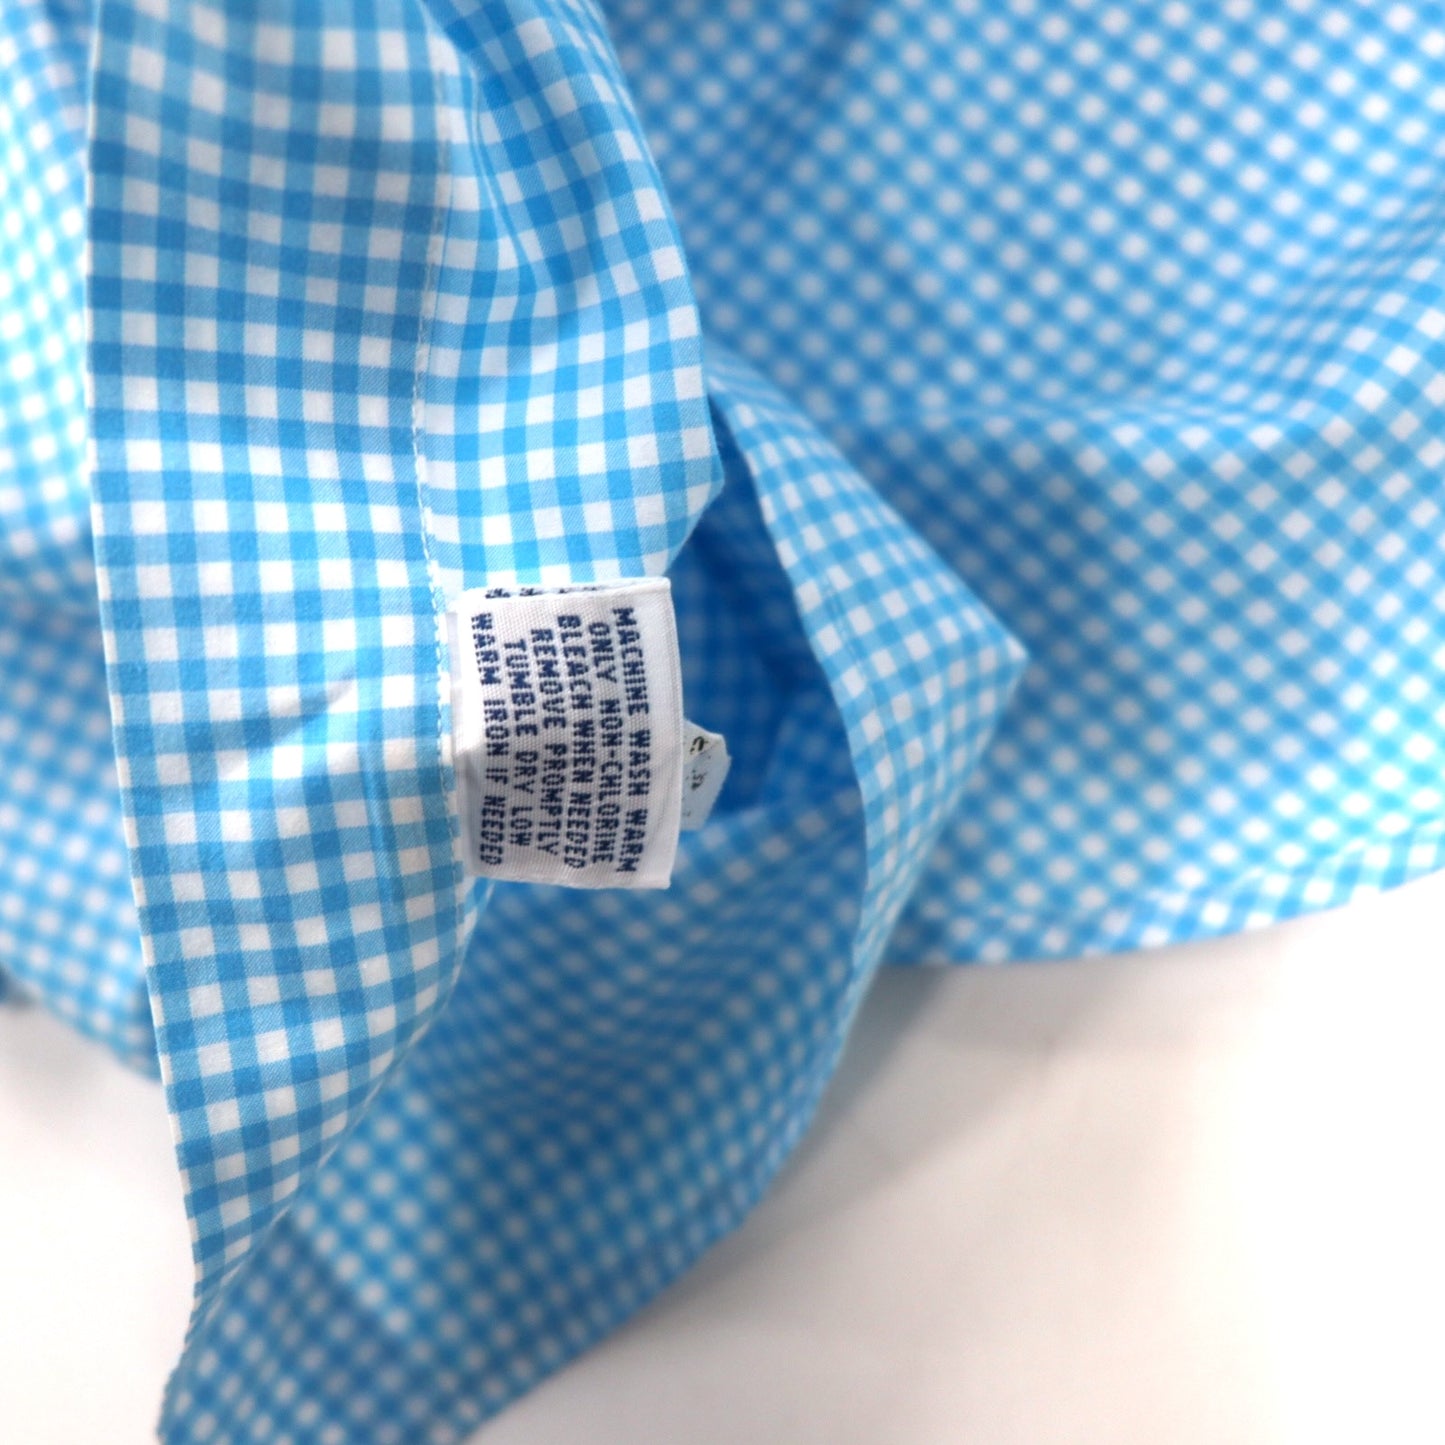 RALPH LAUREN ボタンダウンシャツ XLT TALL ブルー ギンガムチェック コットン スモールポニー刺繍